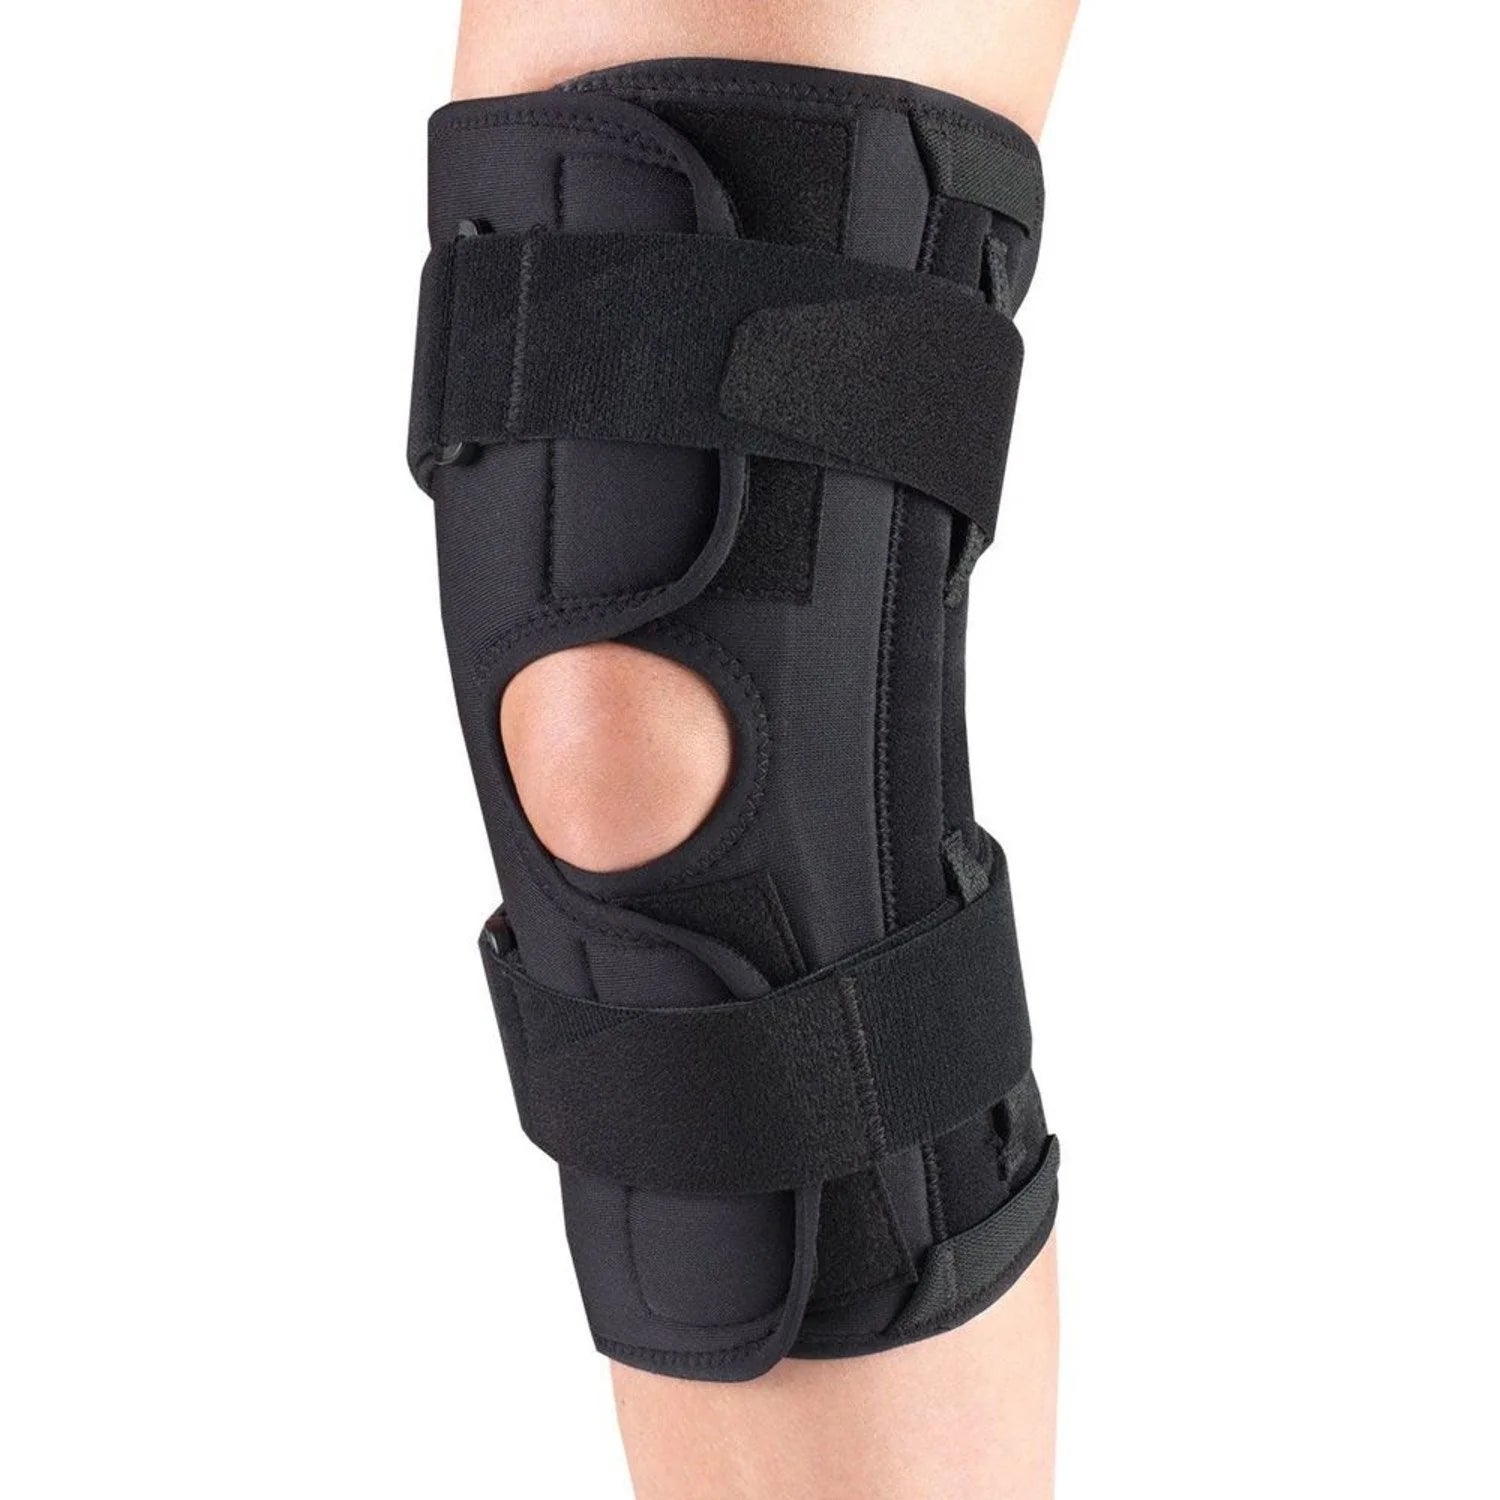 Wrap around hinged knee support brace